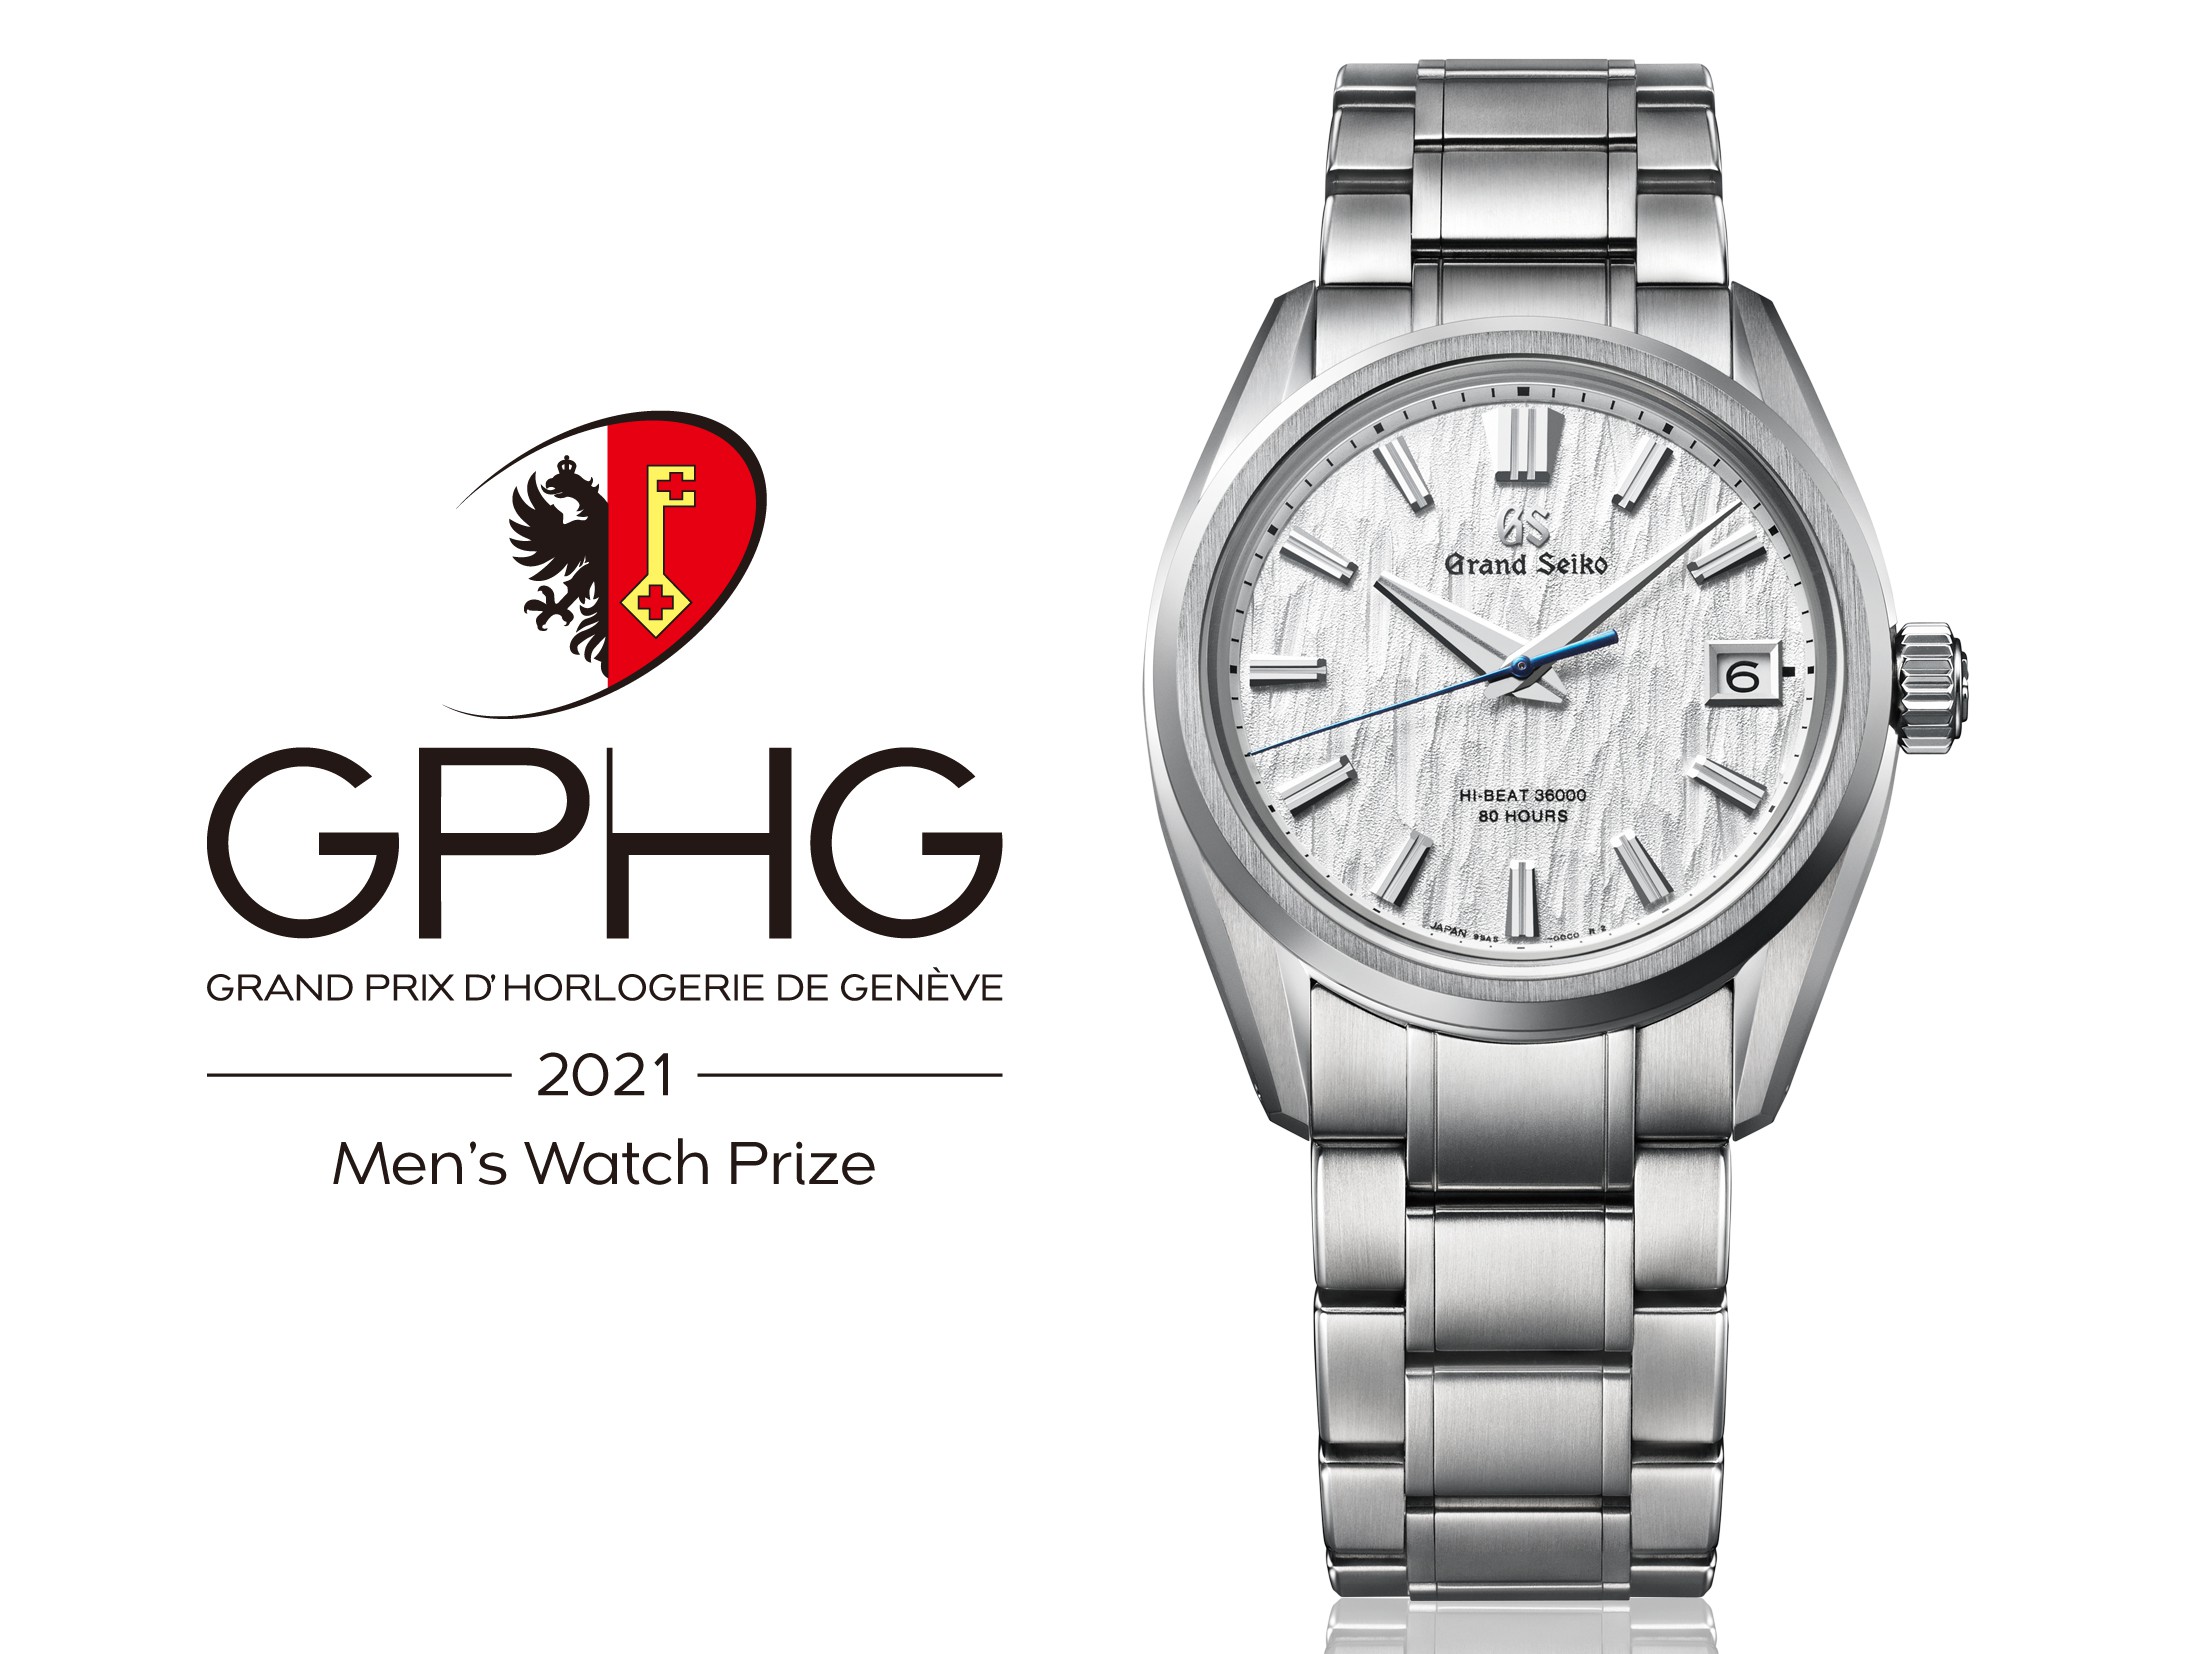 The Grand Seiko Hi-Beat 36000 80 Hours wins the Mens Watch Prize at the 2021 Grand Prix dHorlogerie de Genève